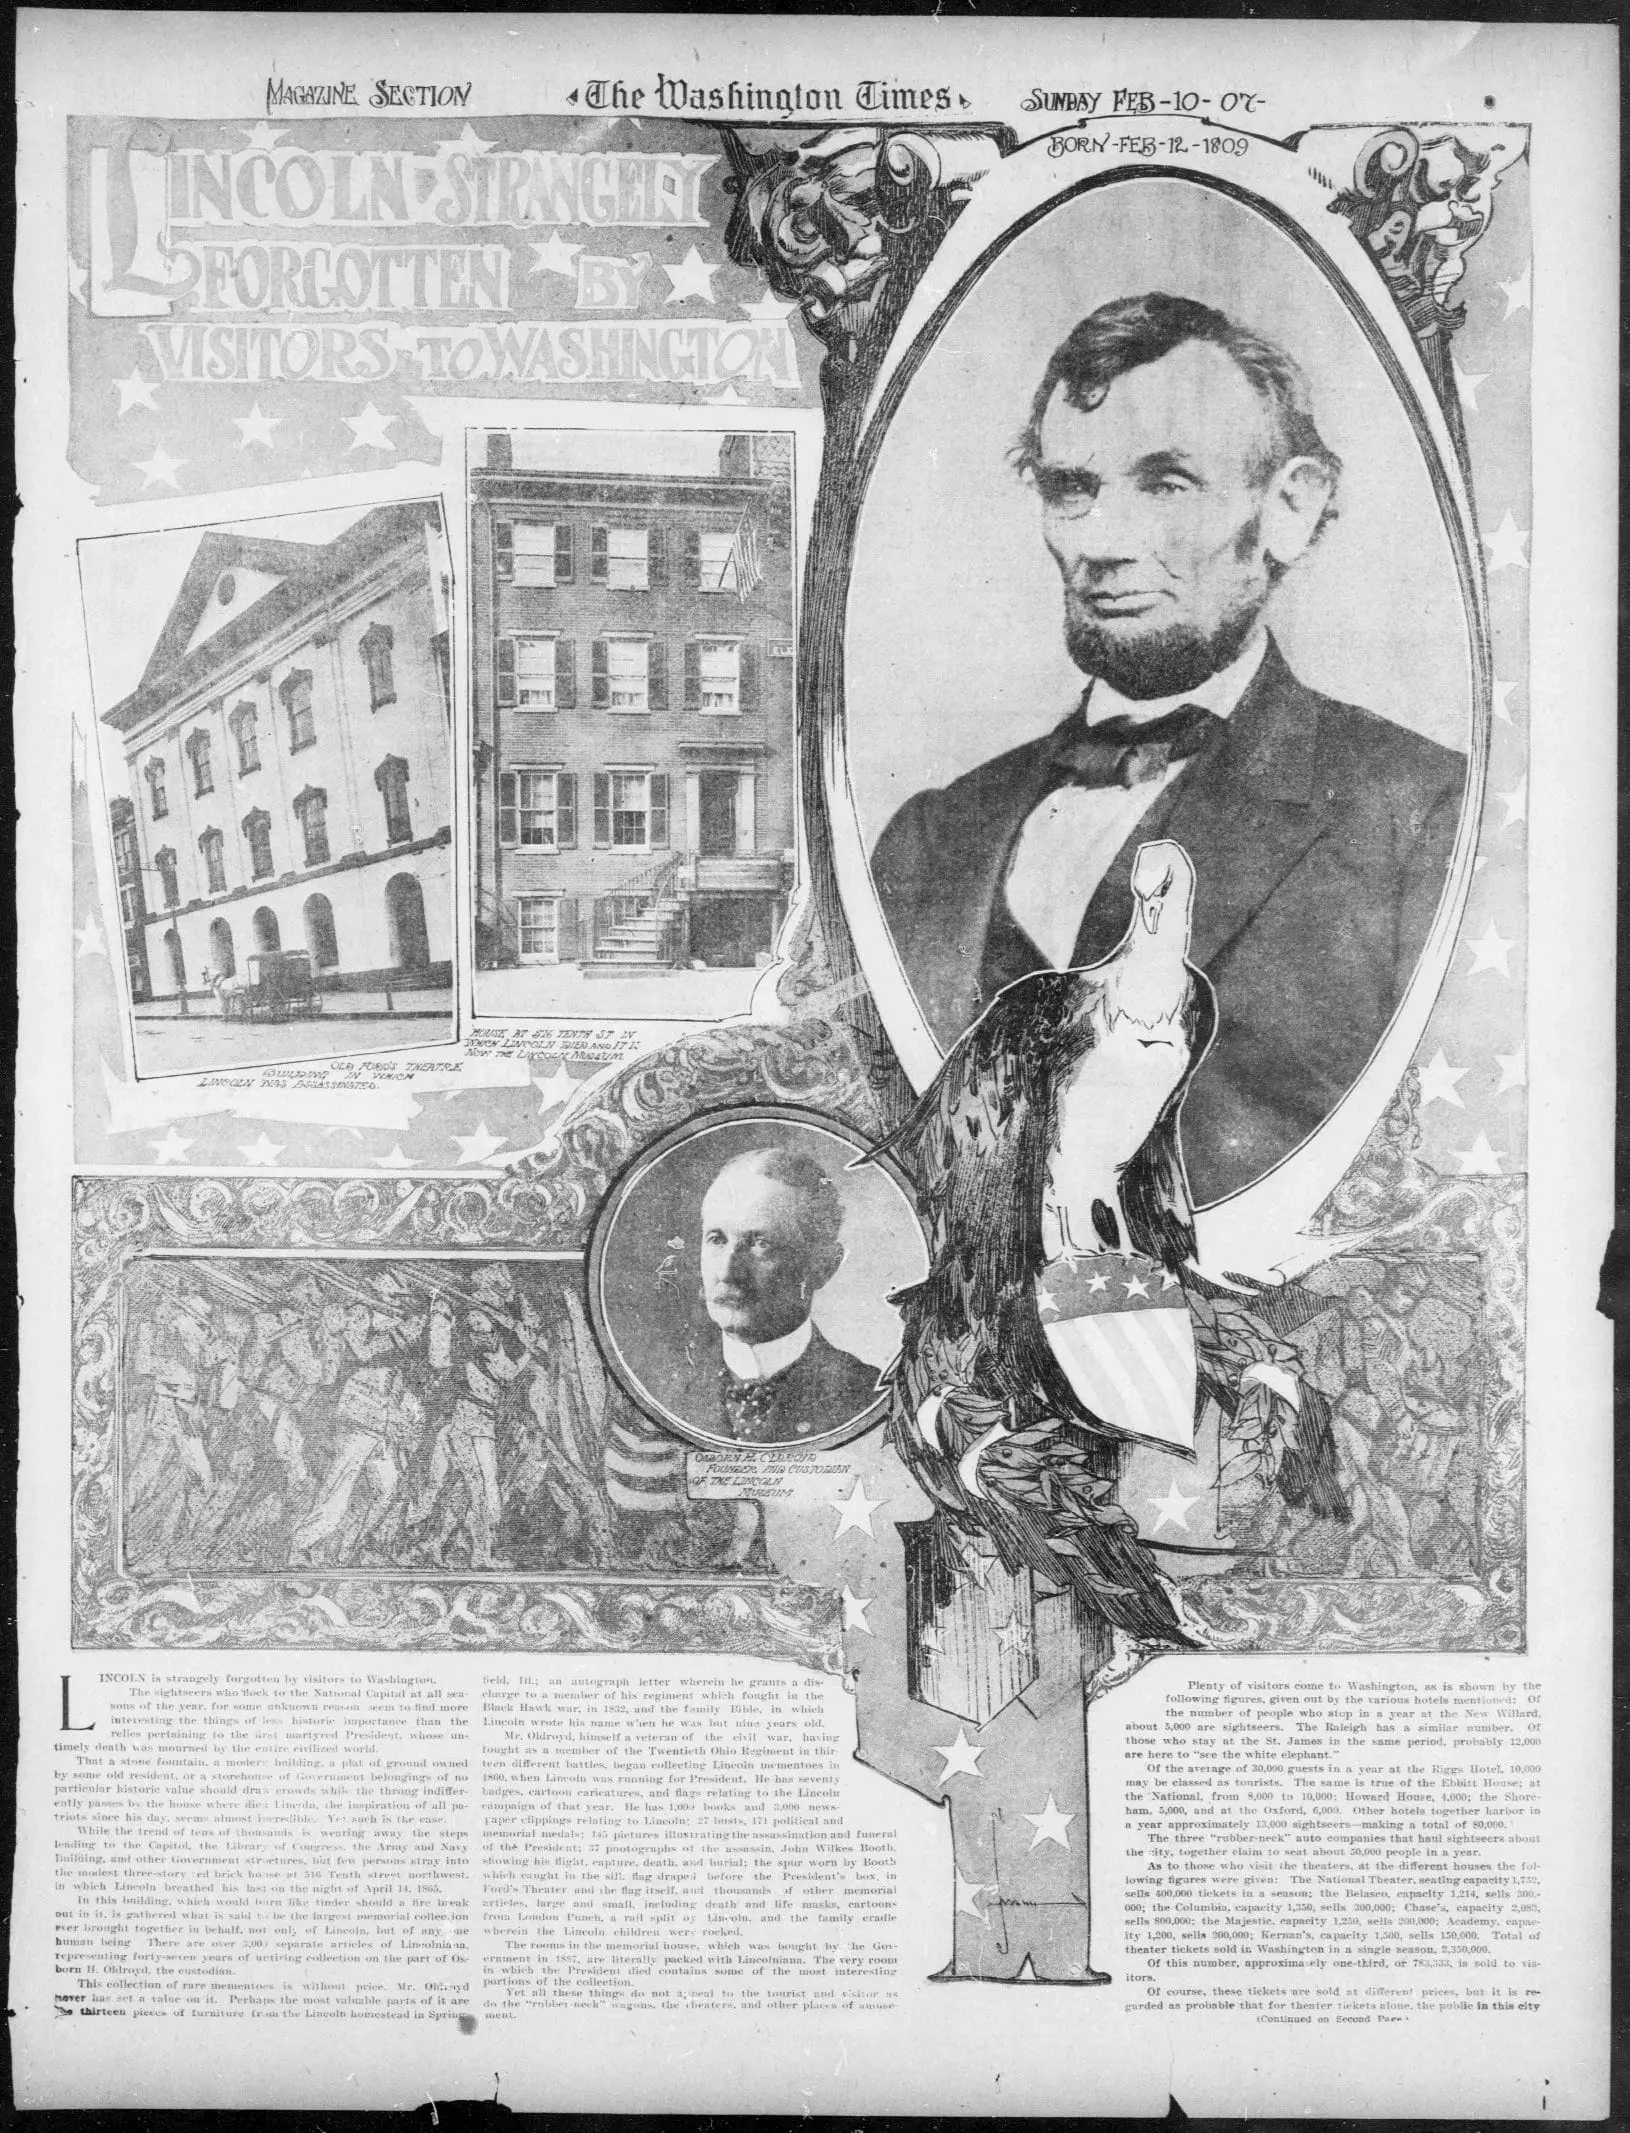 Lincoln strangely forgotten - Washington Times